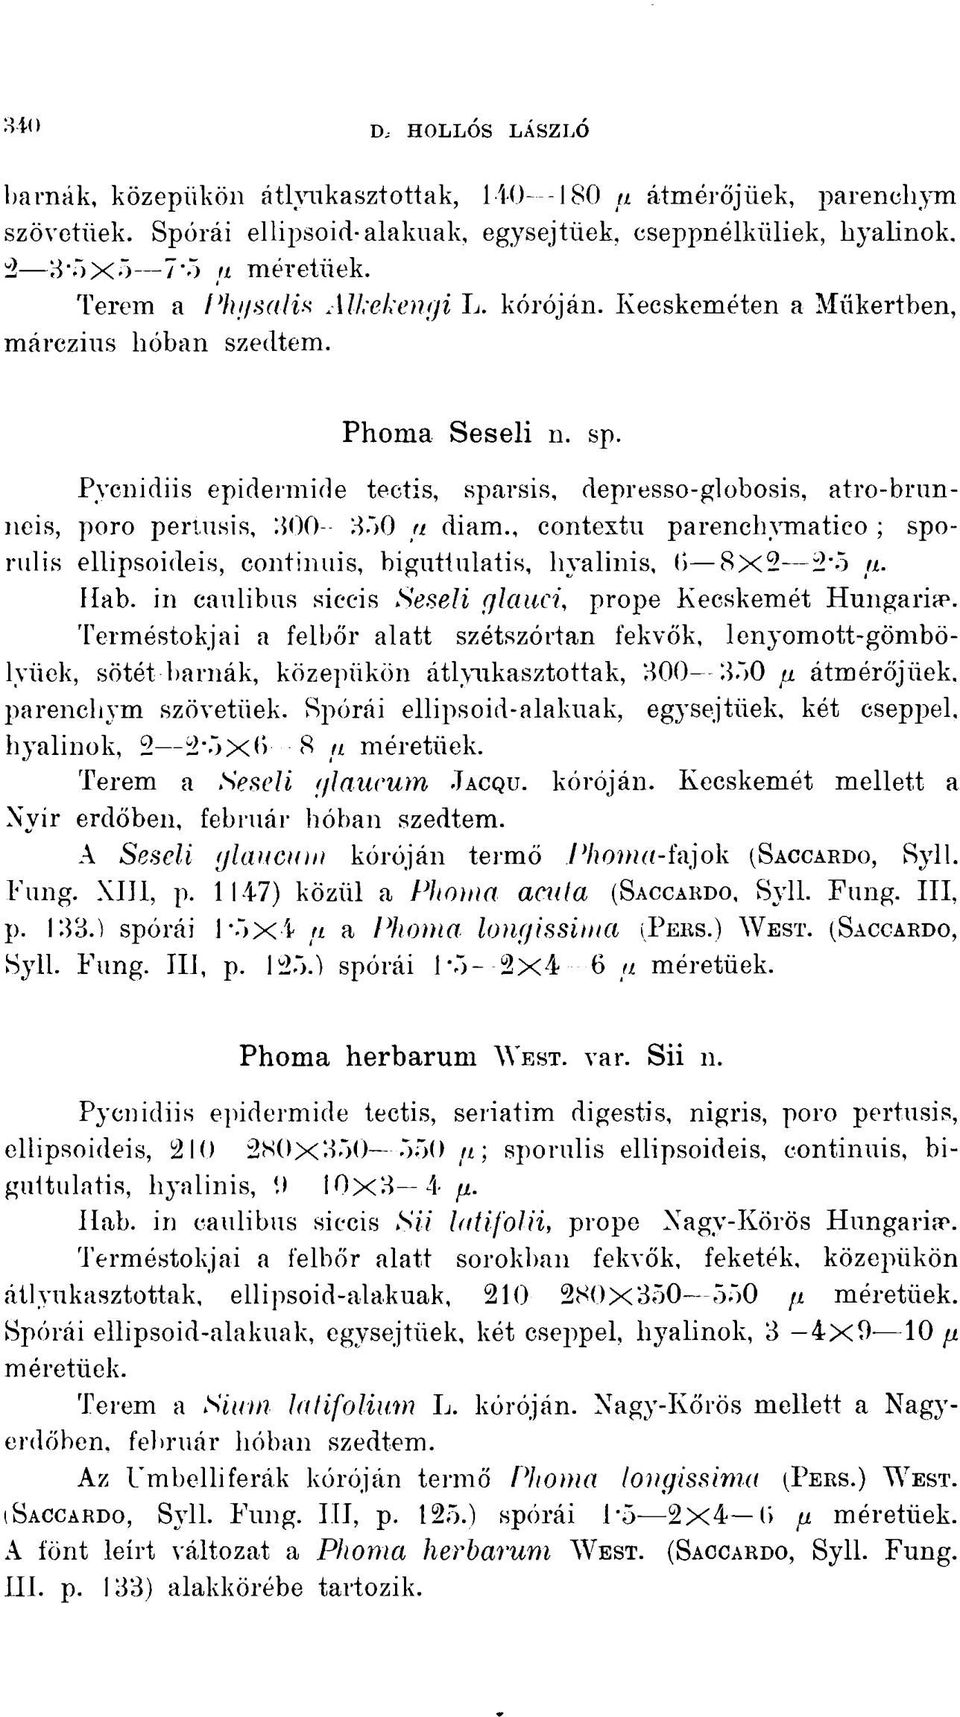 Pycnidiis epidermide tectis, sparsis, depresso-globosis, atro-brunneis, poro periusis, 300 350 u diam.. contextu parenchymatieo ; sporulis ellipsoideis, continuis, biguttulatis, liyalinis, 6 8x2 2*5 u.